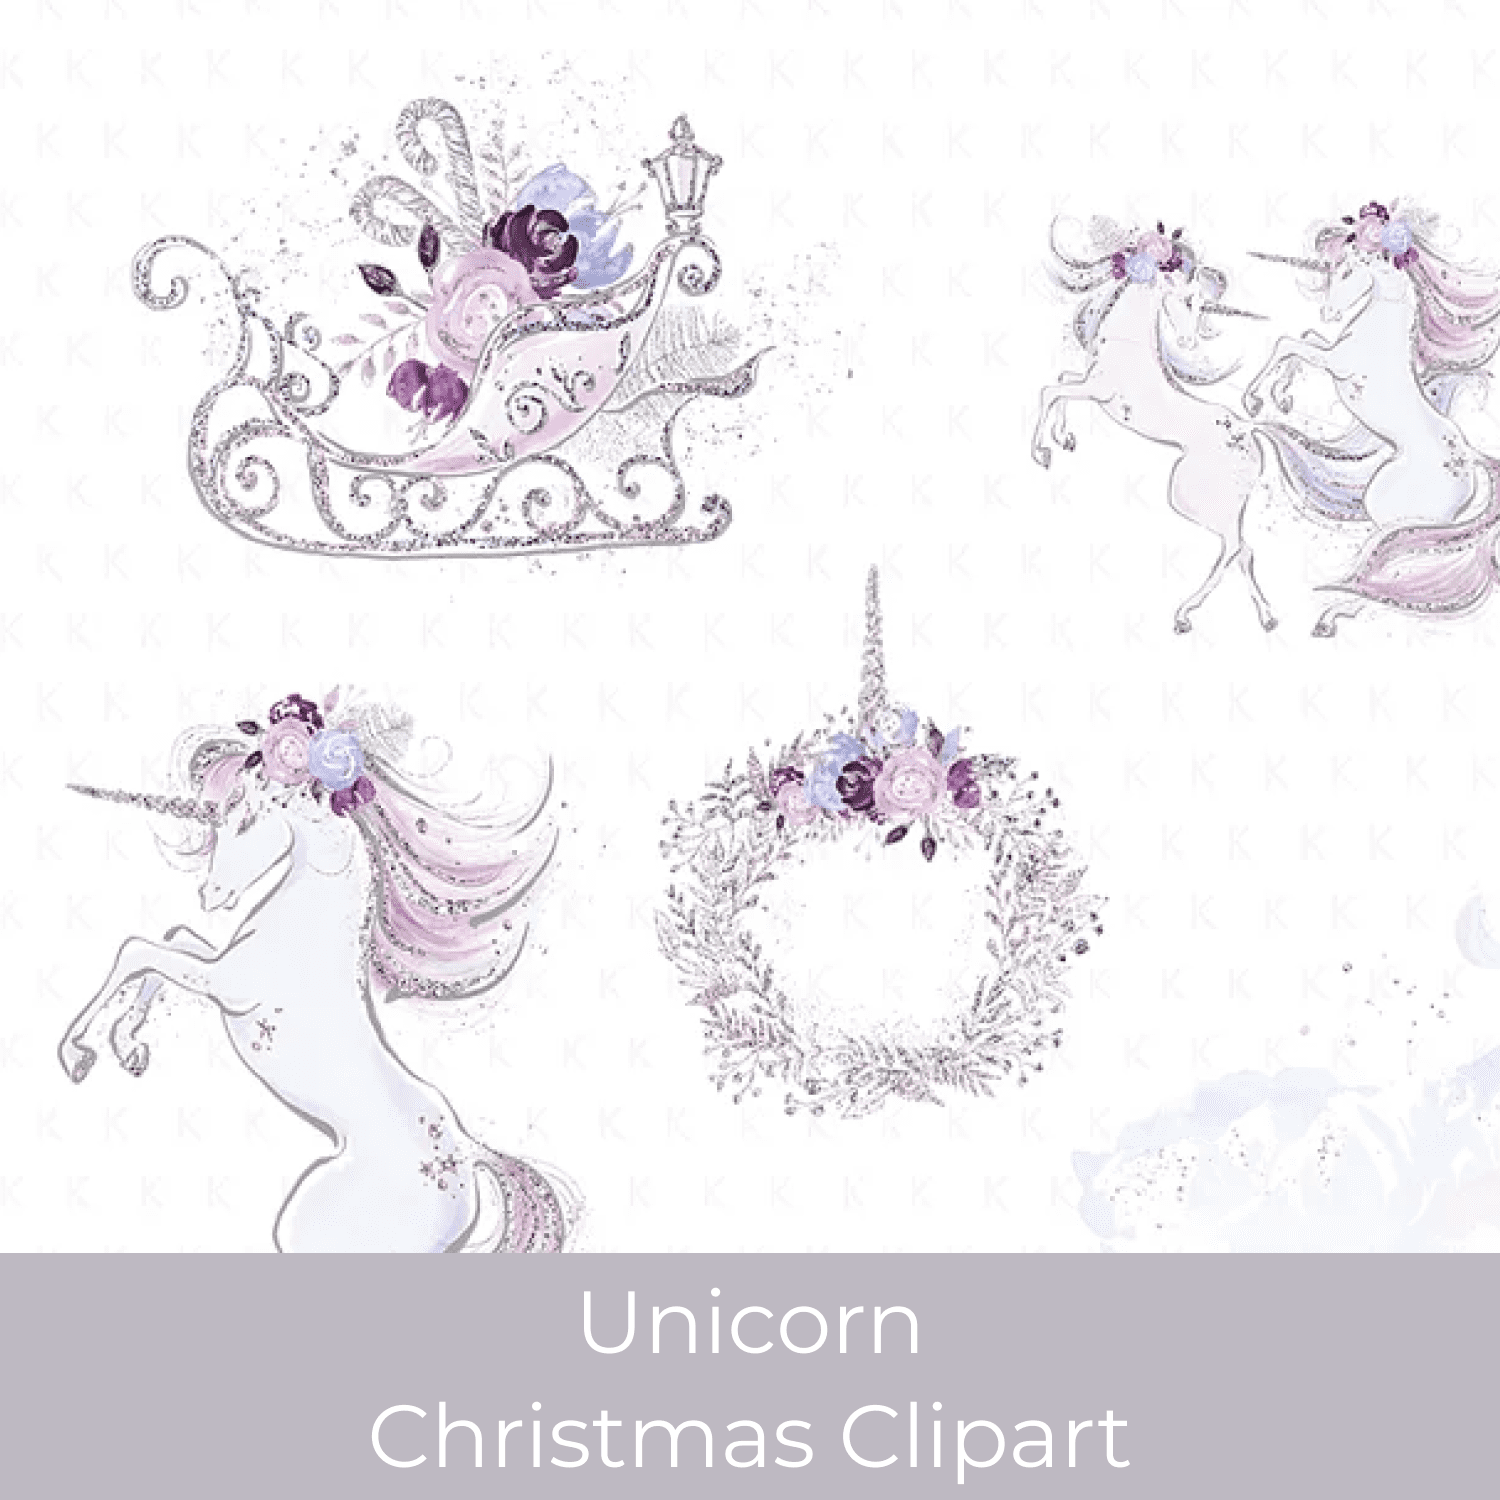 Unicorn Christmas Clipart cover.